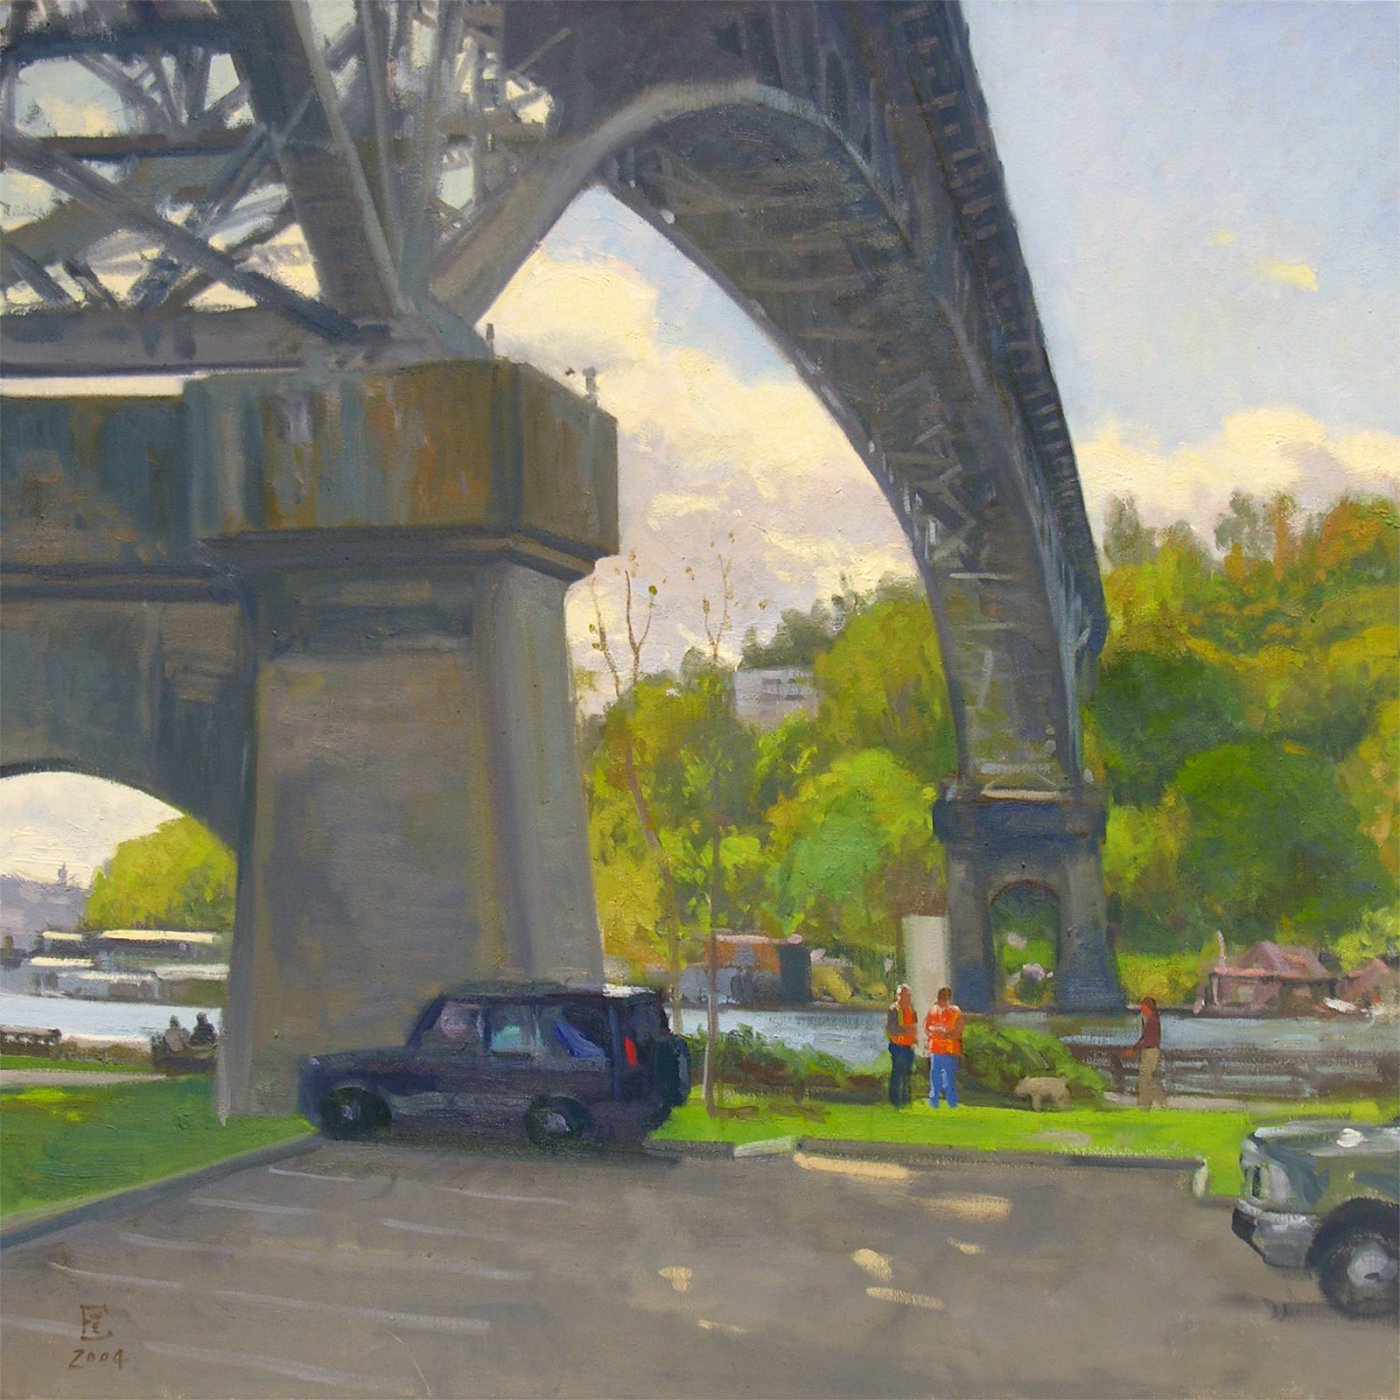 Beneath The Aurora Bridge, oil on canvas, 36 x 36 inches, copyright ©2004, $4,900